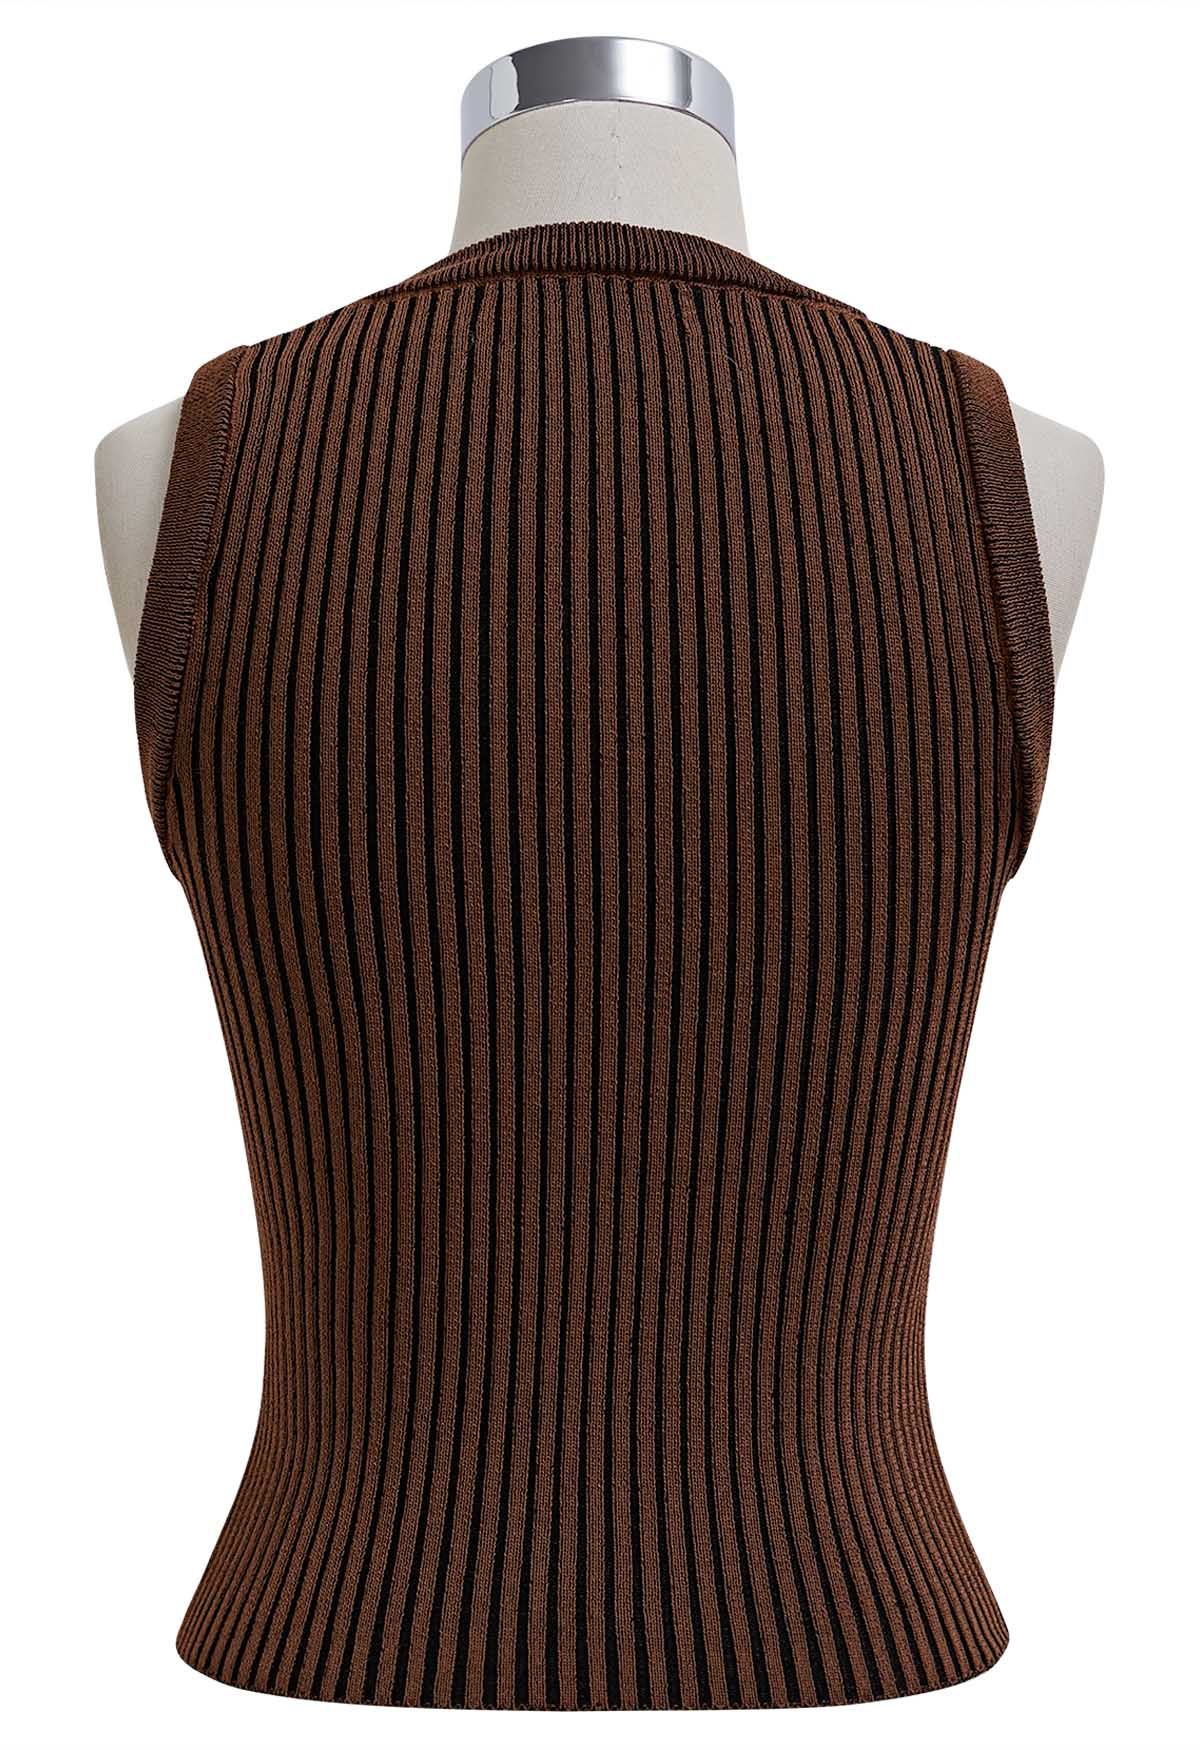 Stripe Texture Knit Tank Top in Brown